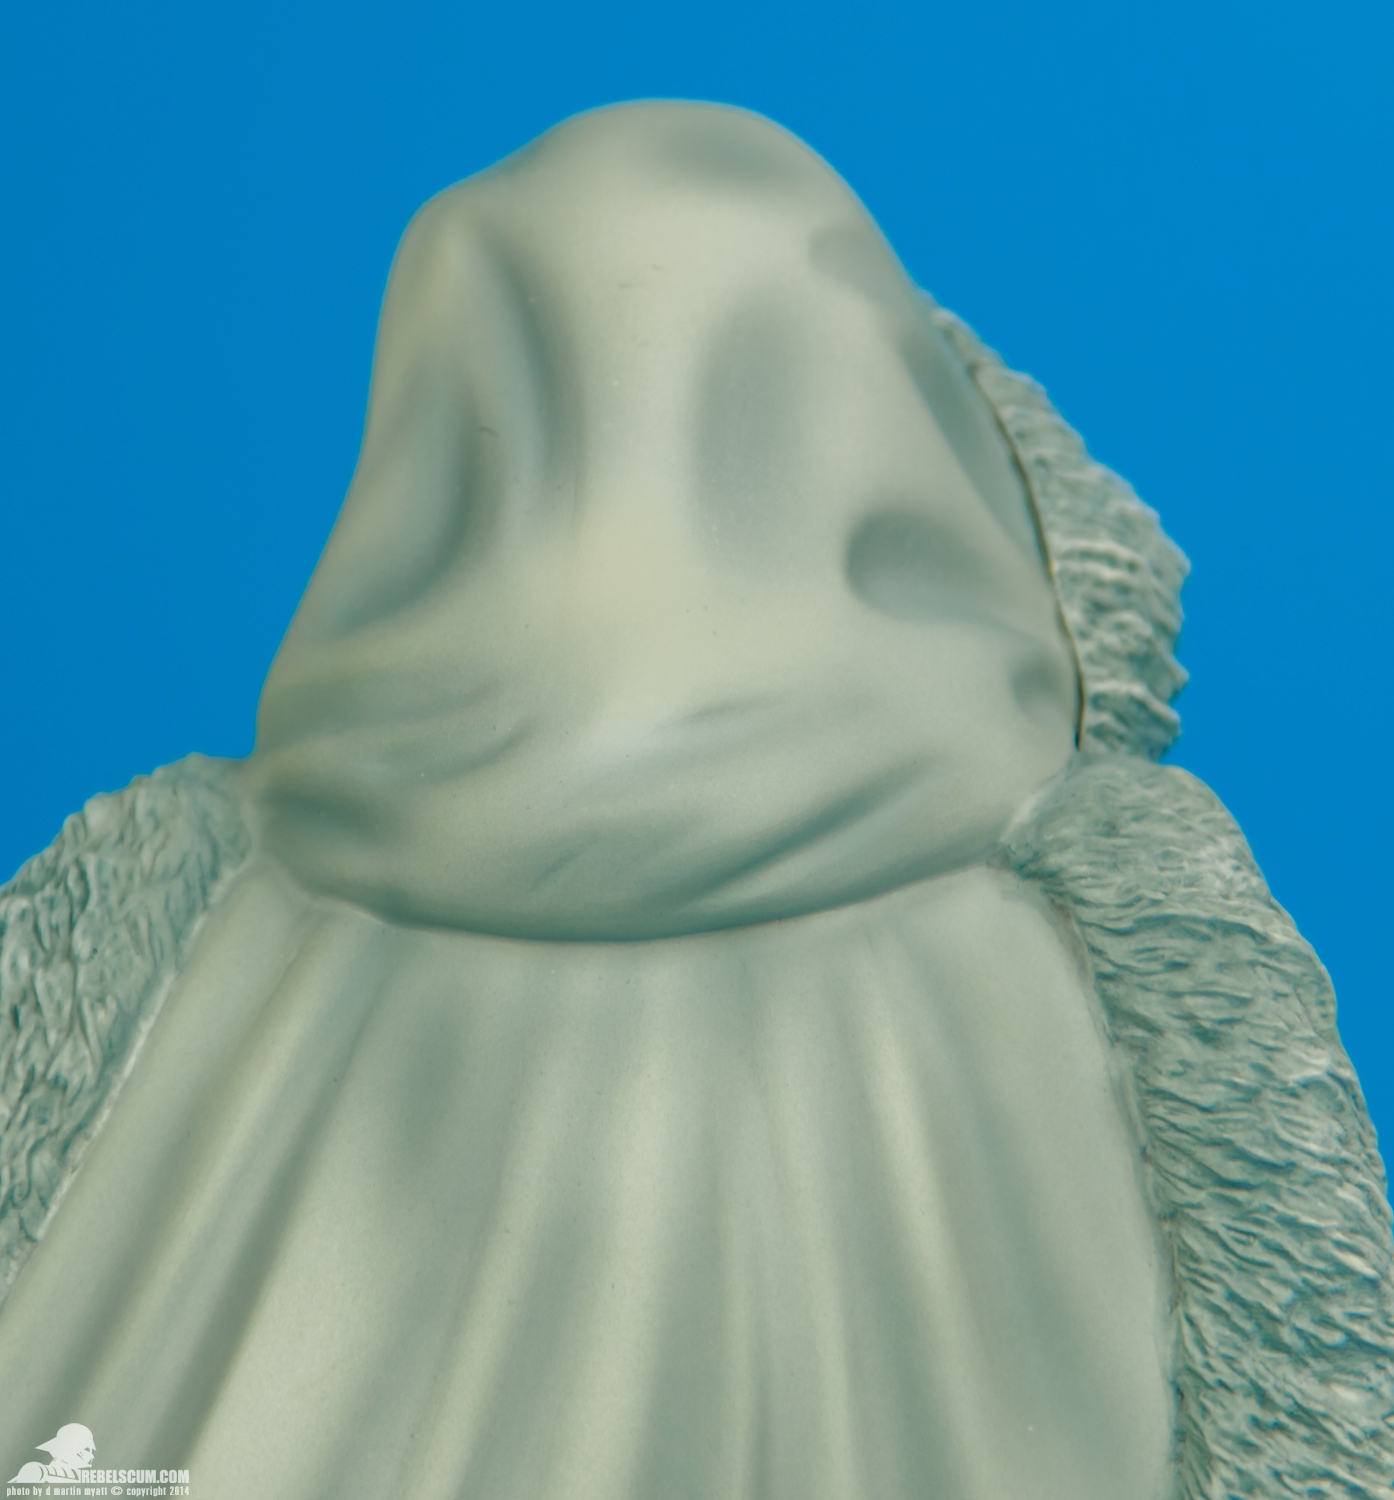 Padme-Amidala-Snowbunny-Statue-Gentle-Giant-Ltd-008.jpg